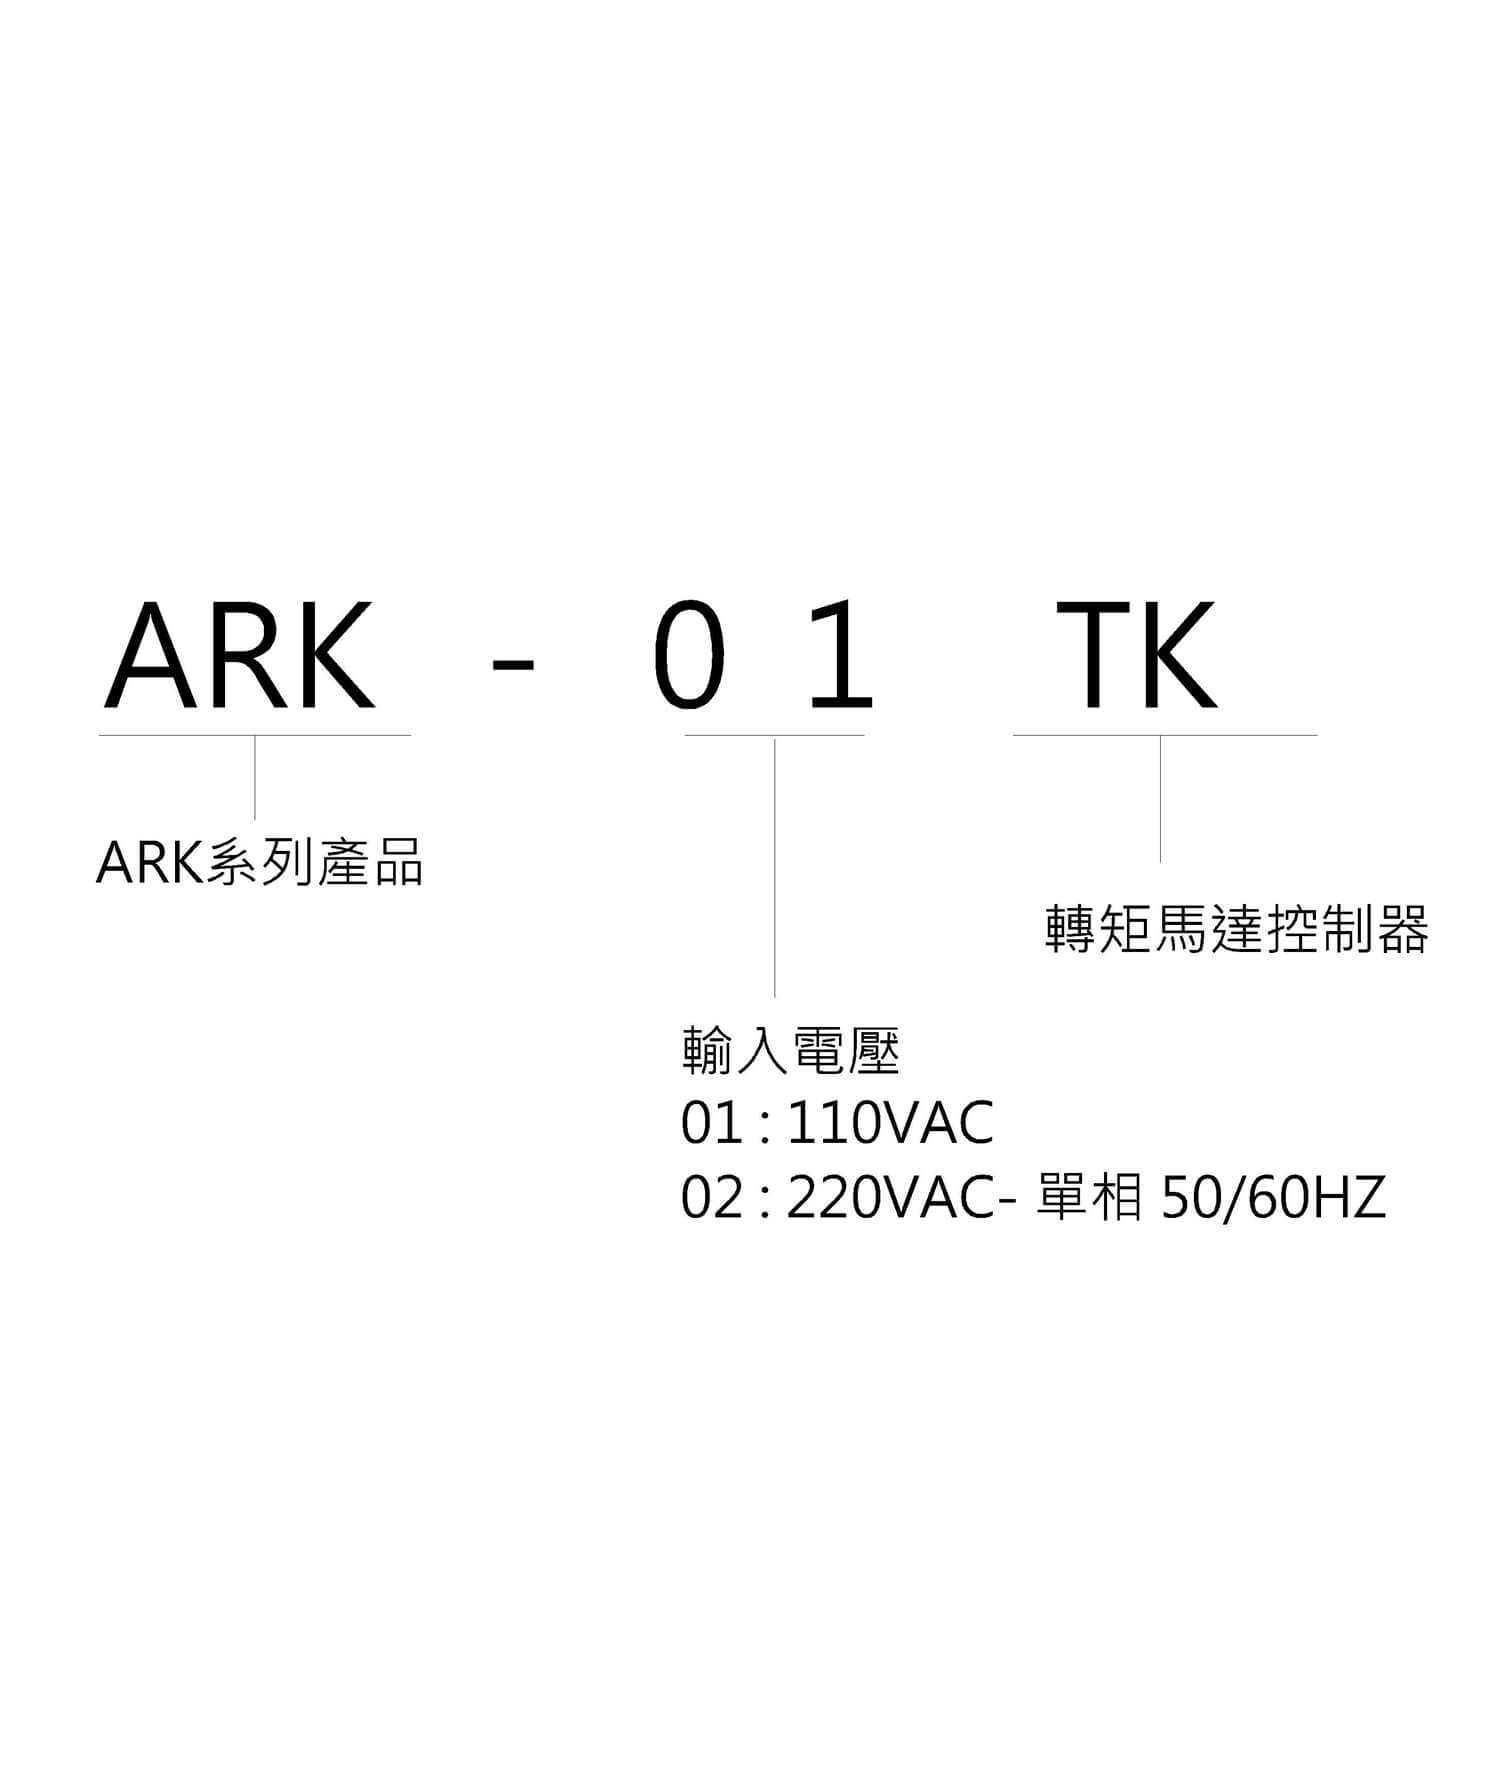 ARK-01TK product code